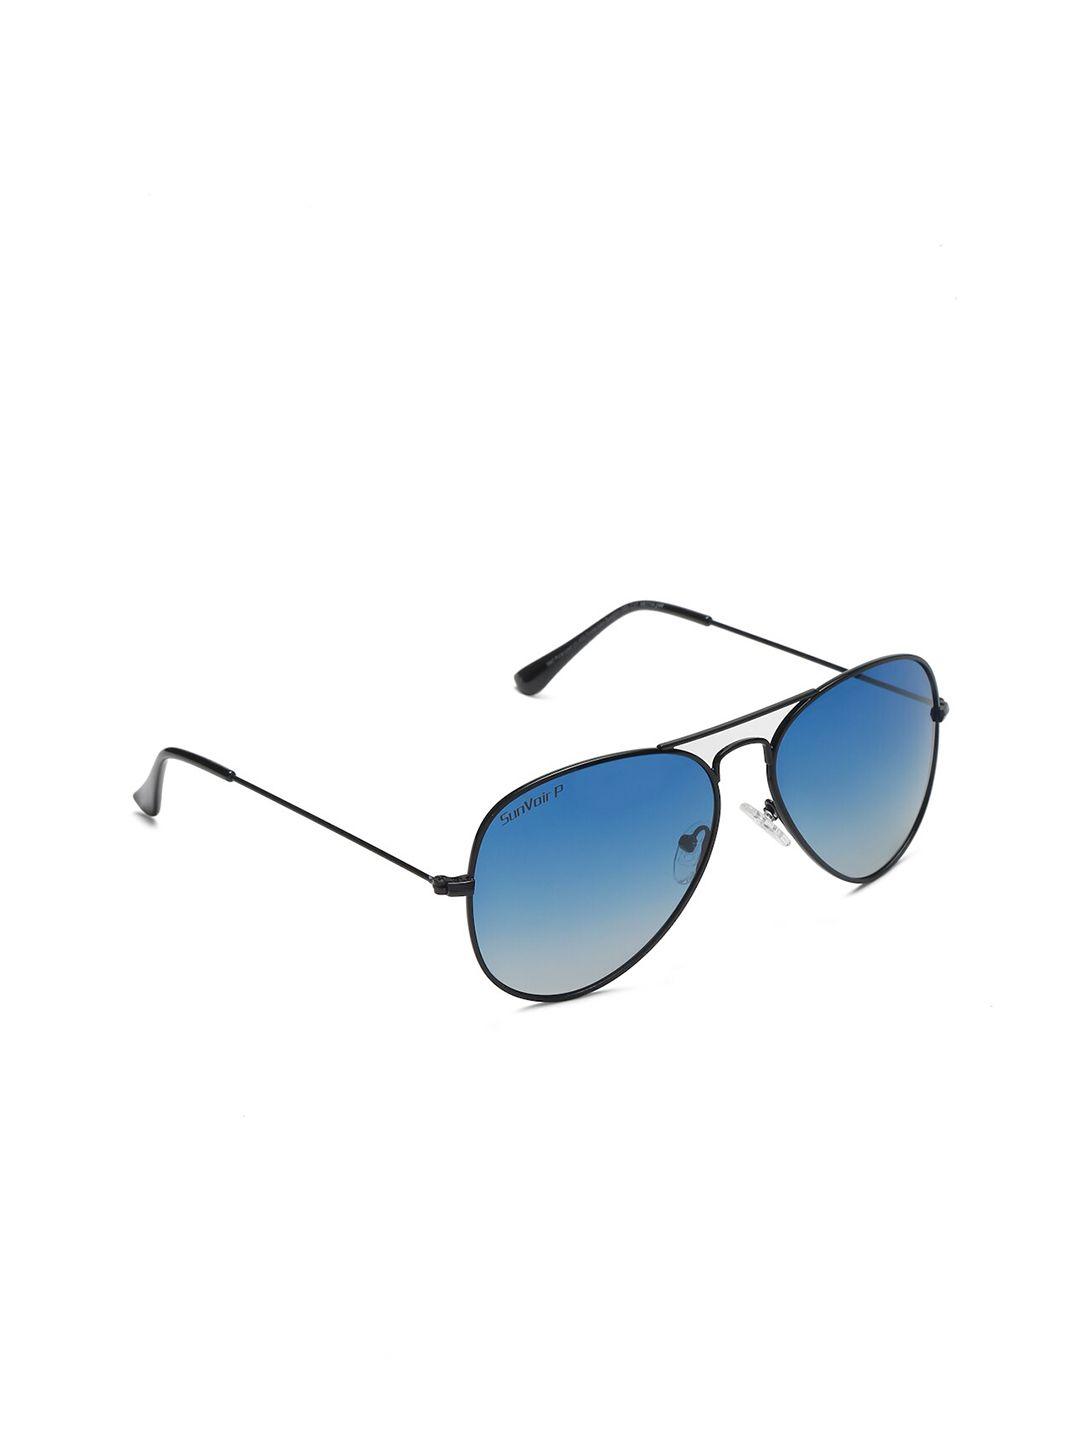 sunvoir unisex blue lens & black aviator sunglasses with polarised lens